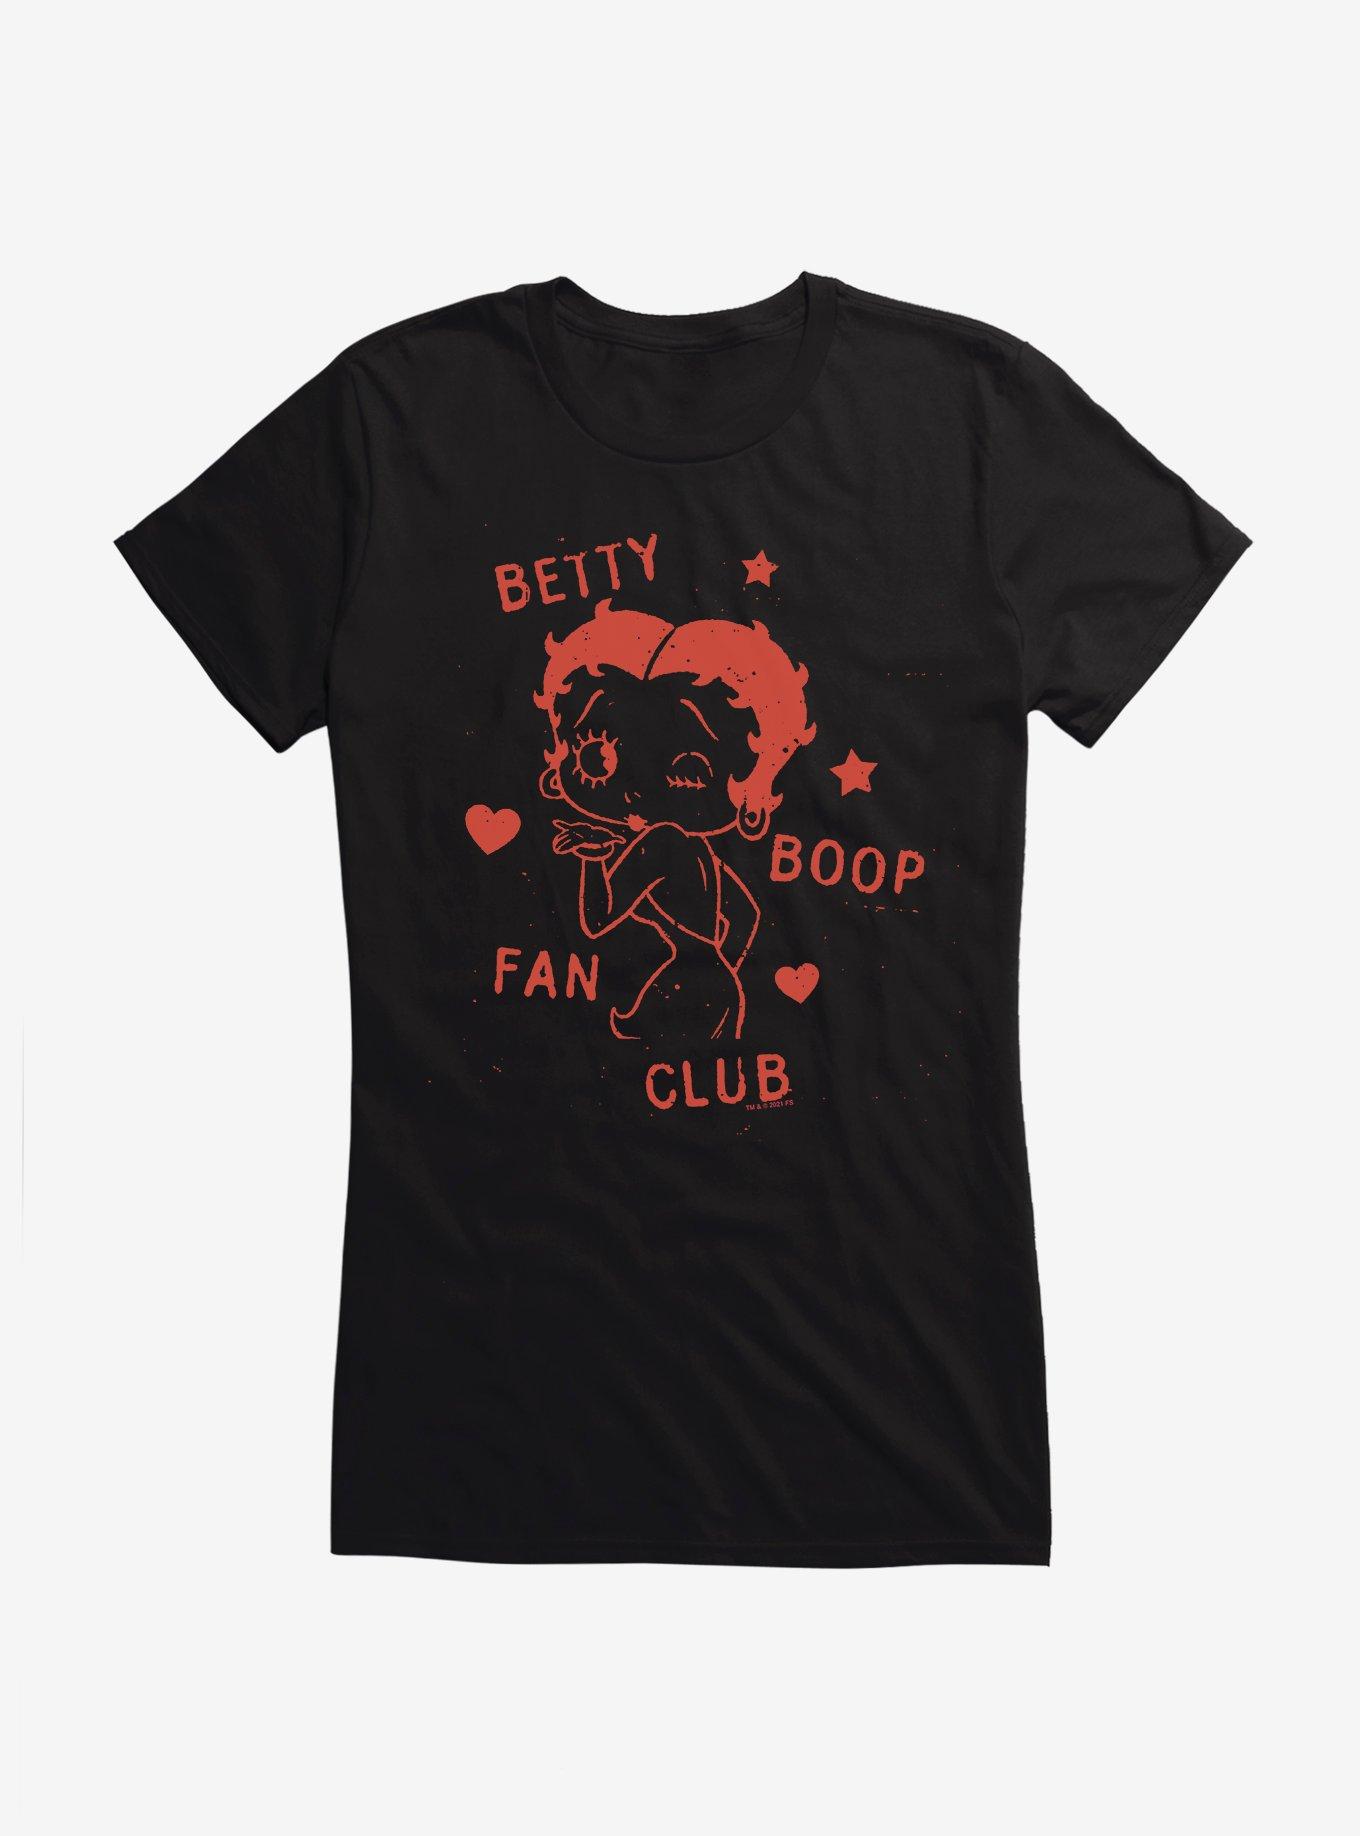 Betty Boop Stars And Hearts Girls T-Shirt